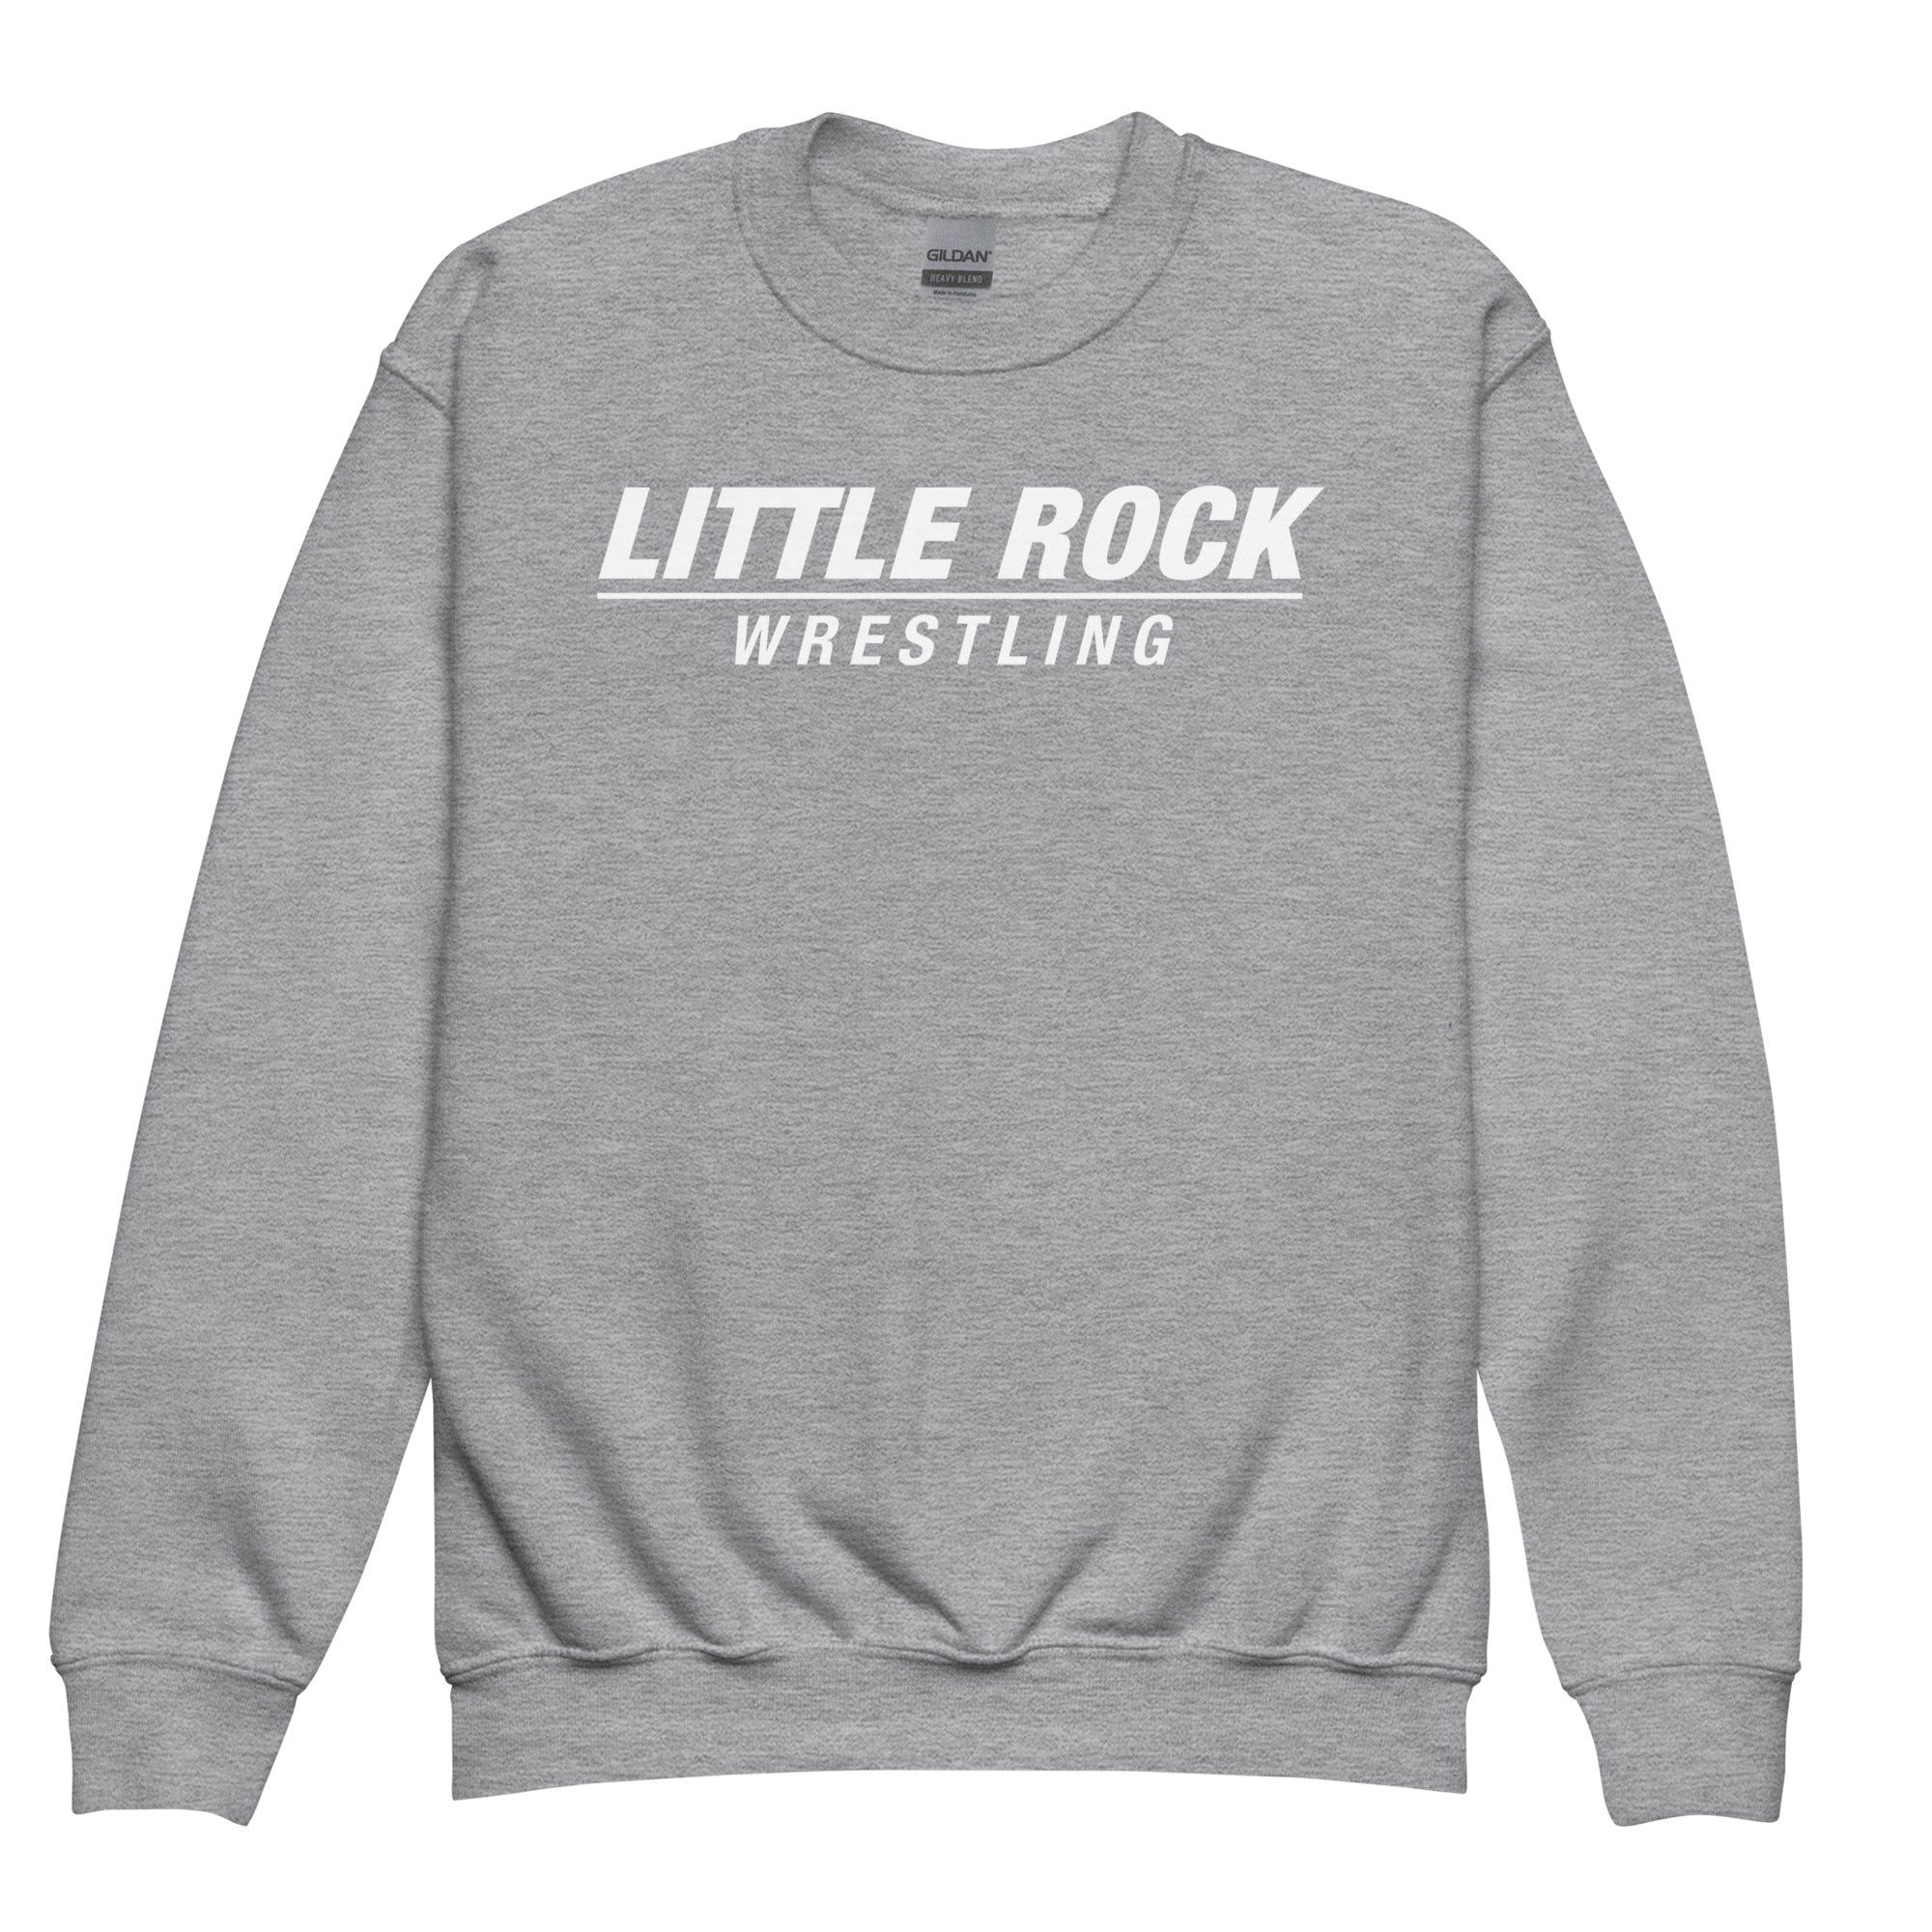 University of Arkansas at Little Rock - Wrestling Youth Crew Neck Sweatshirt